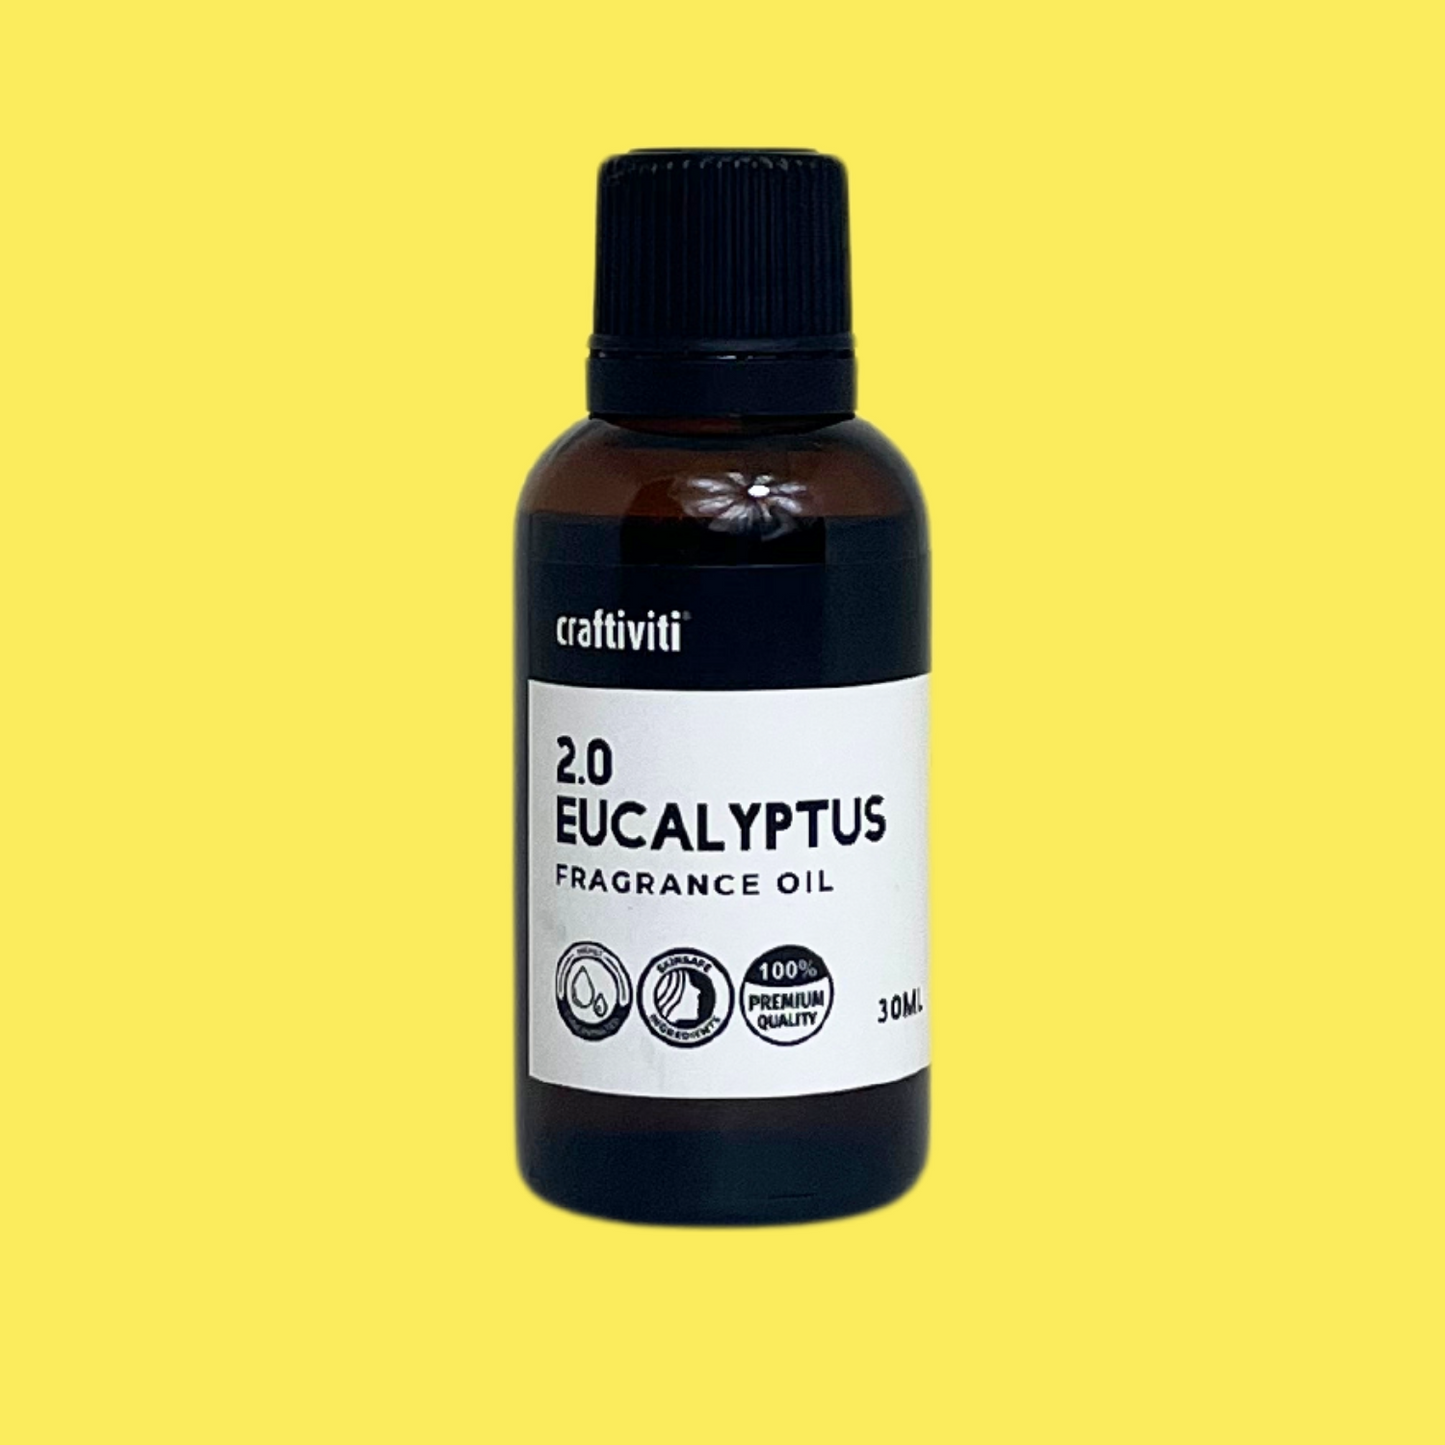 2.0 Eucalyptus Fragrance Oil